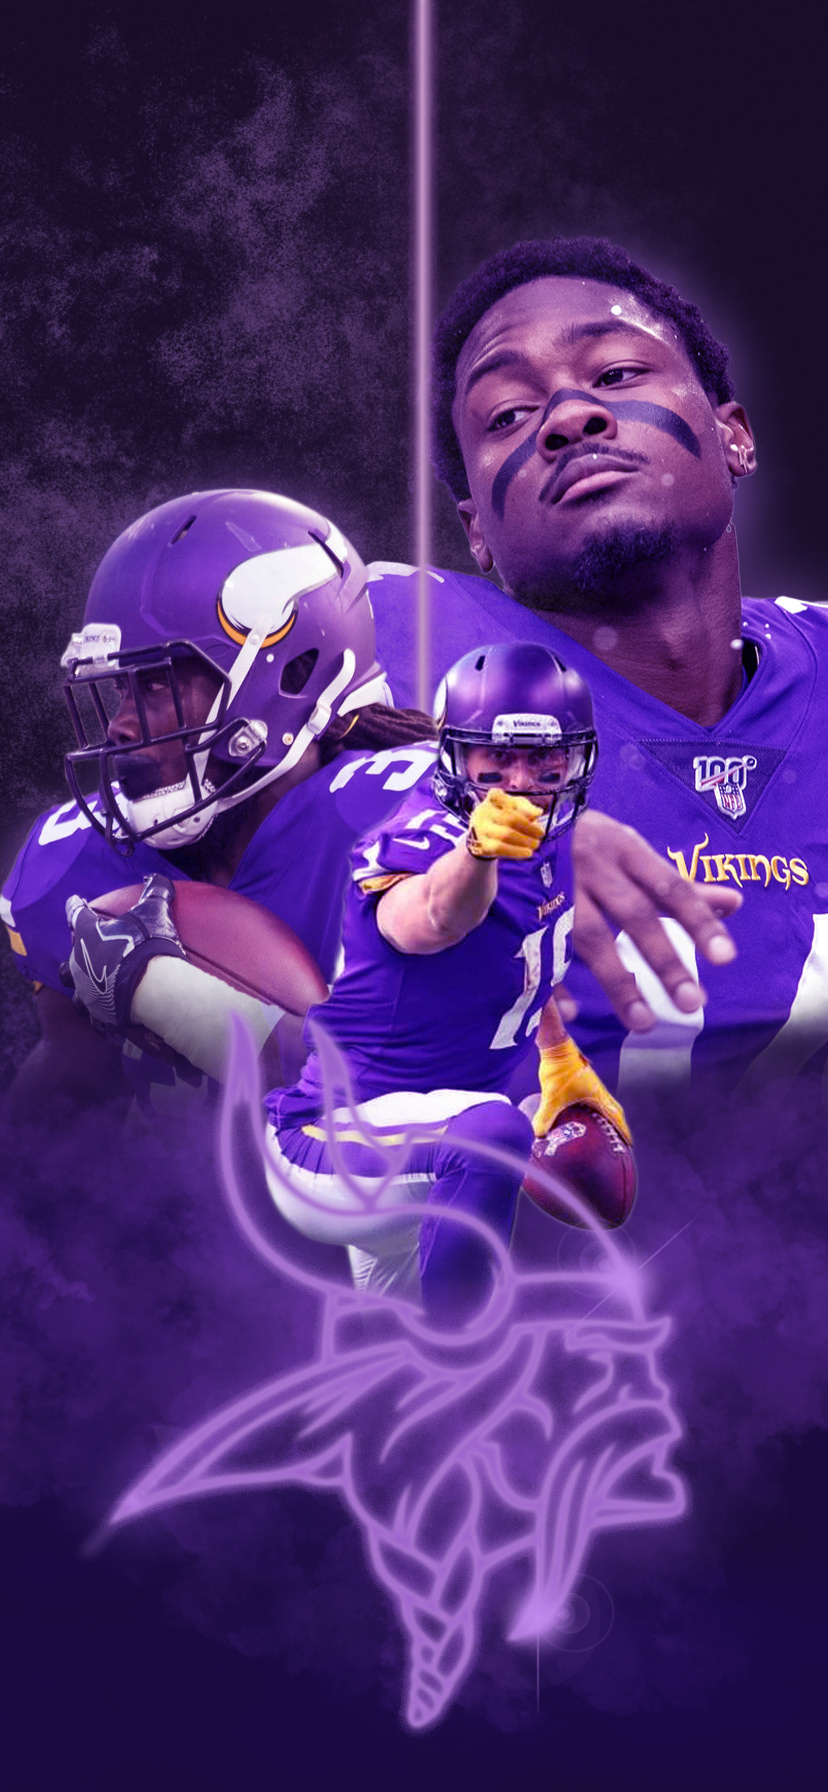 vikings wallpaper,purple,super bowl,football autographed paraphernalia,american football,sports gear